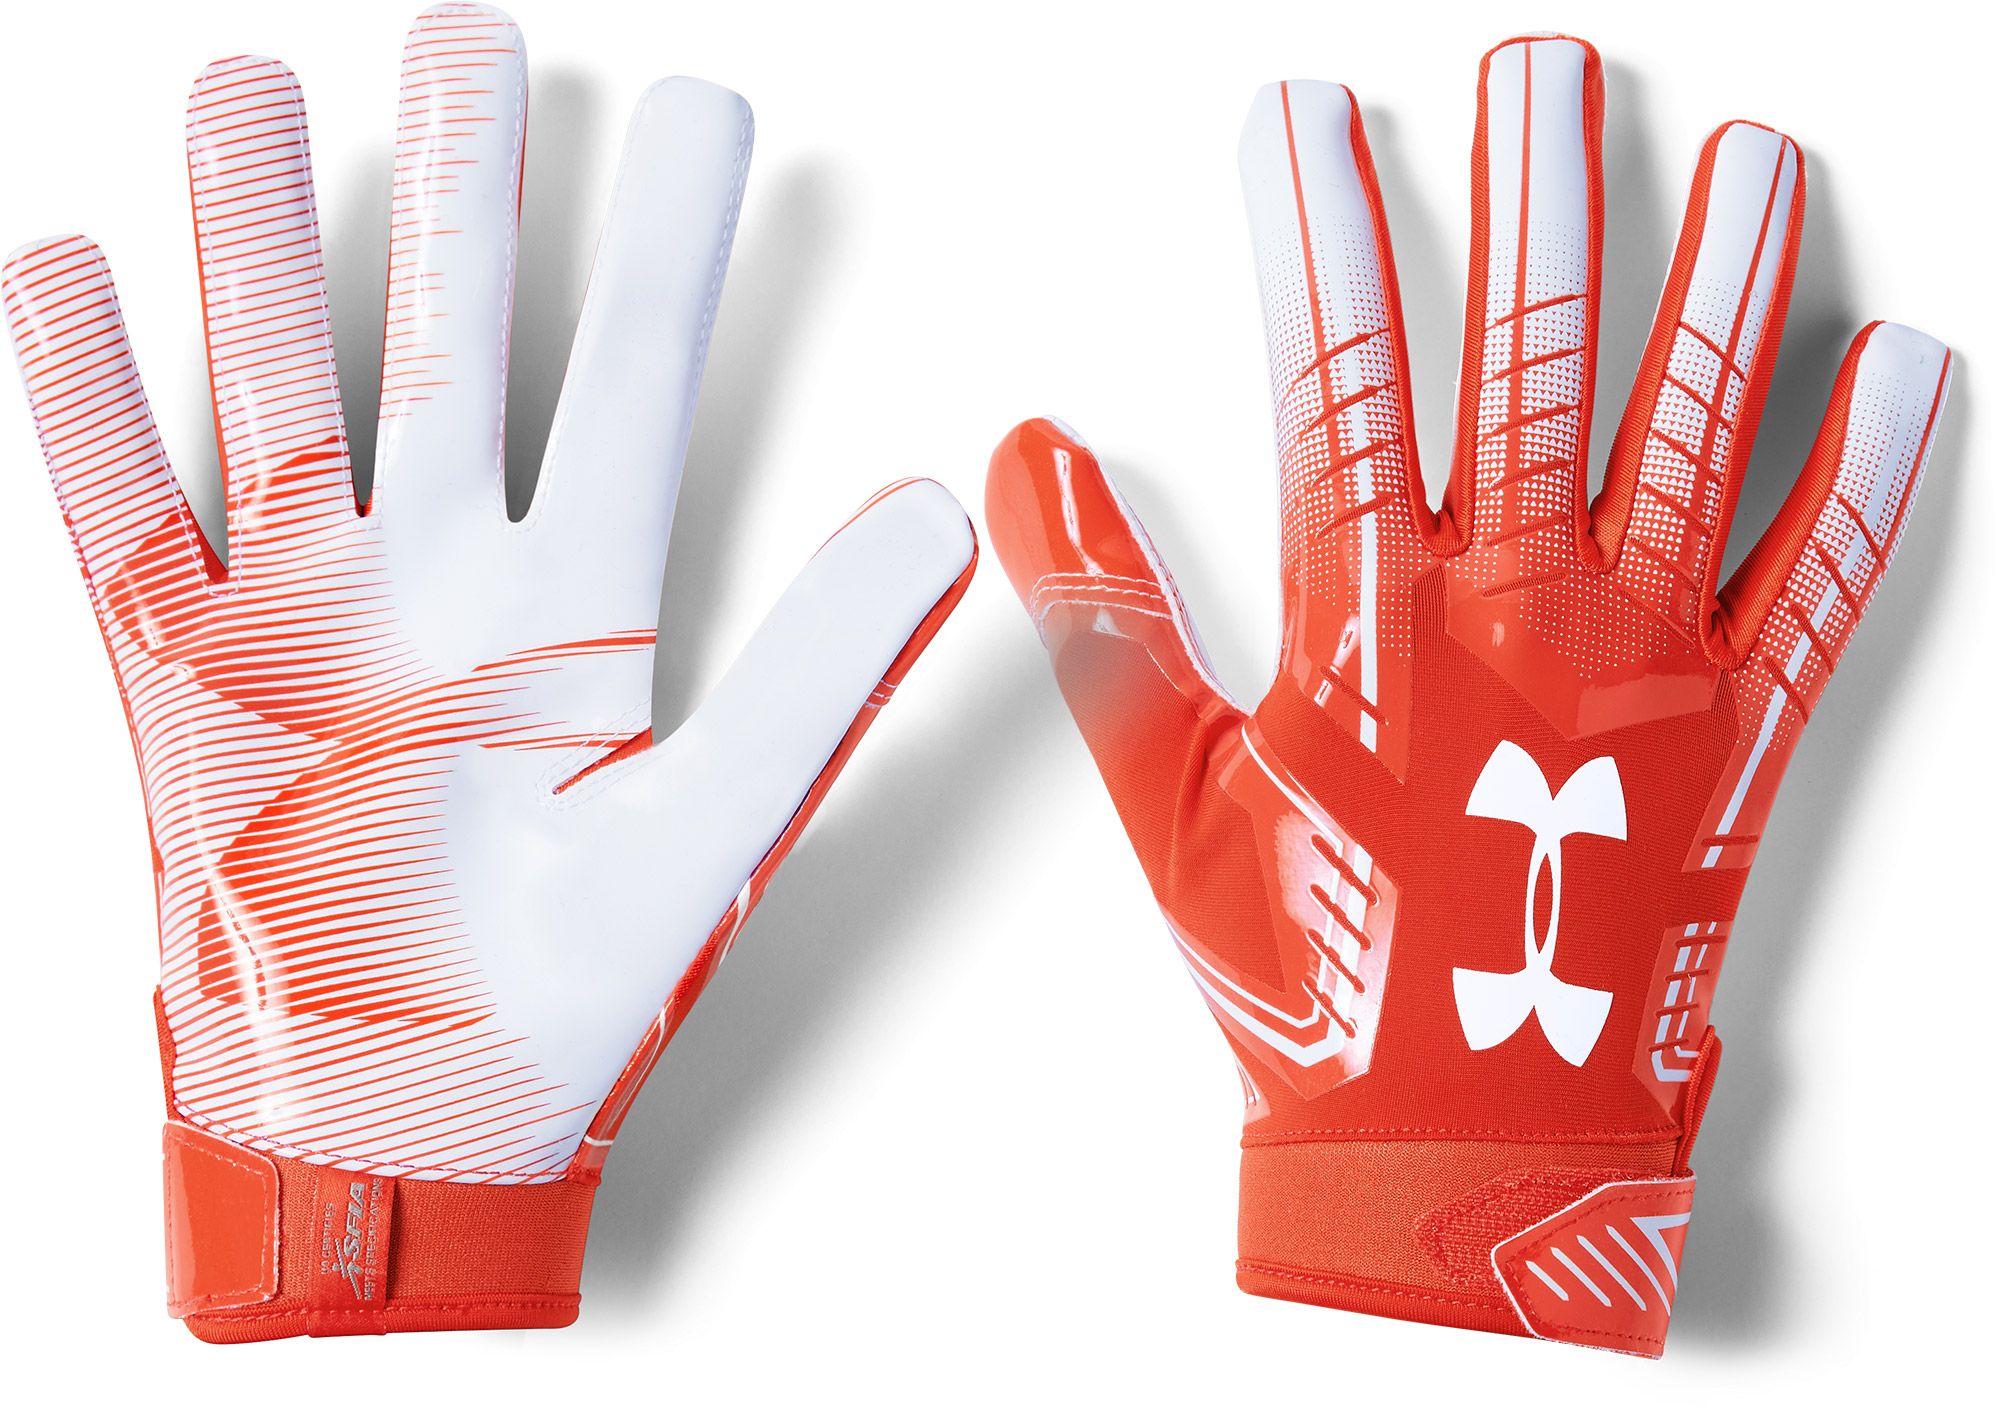 adidas adult scorchlight 5.0 receiver gloves